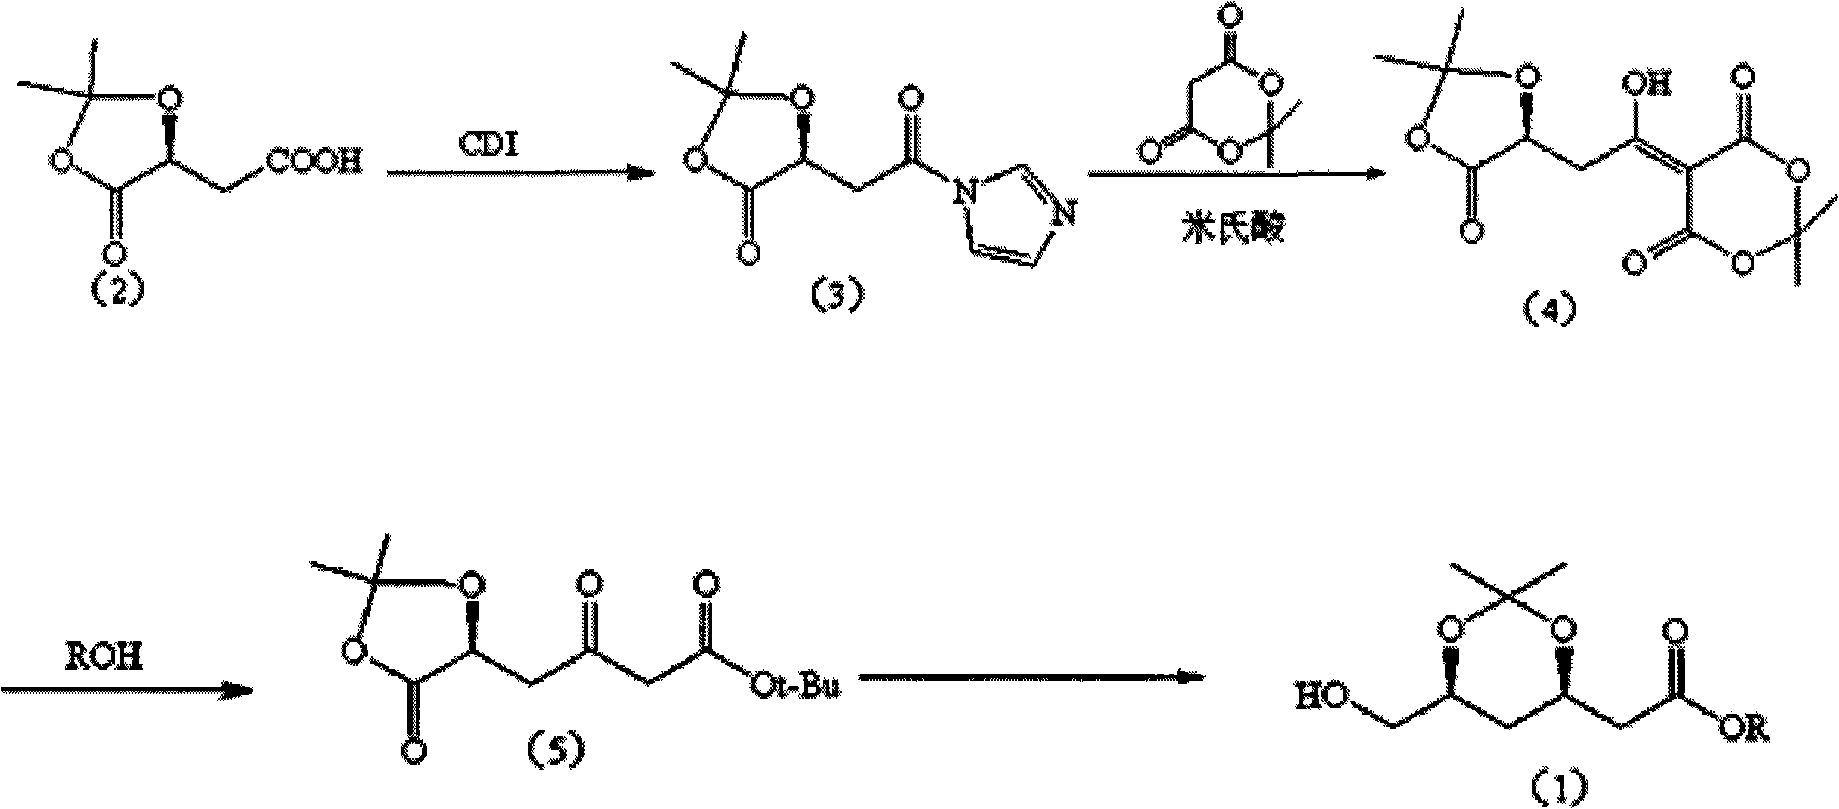 Method for preparing (3R, 5S)-3, 5-O-isopropylidene-3, 5, 6-trihydroxy caproic acid hexylic acid derivative